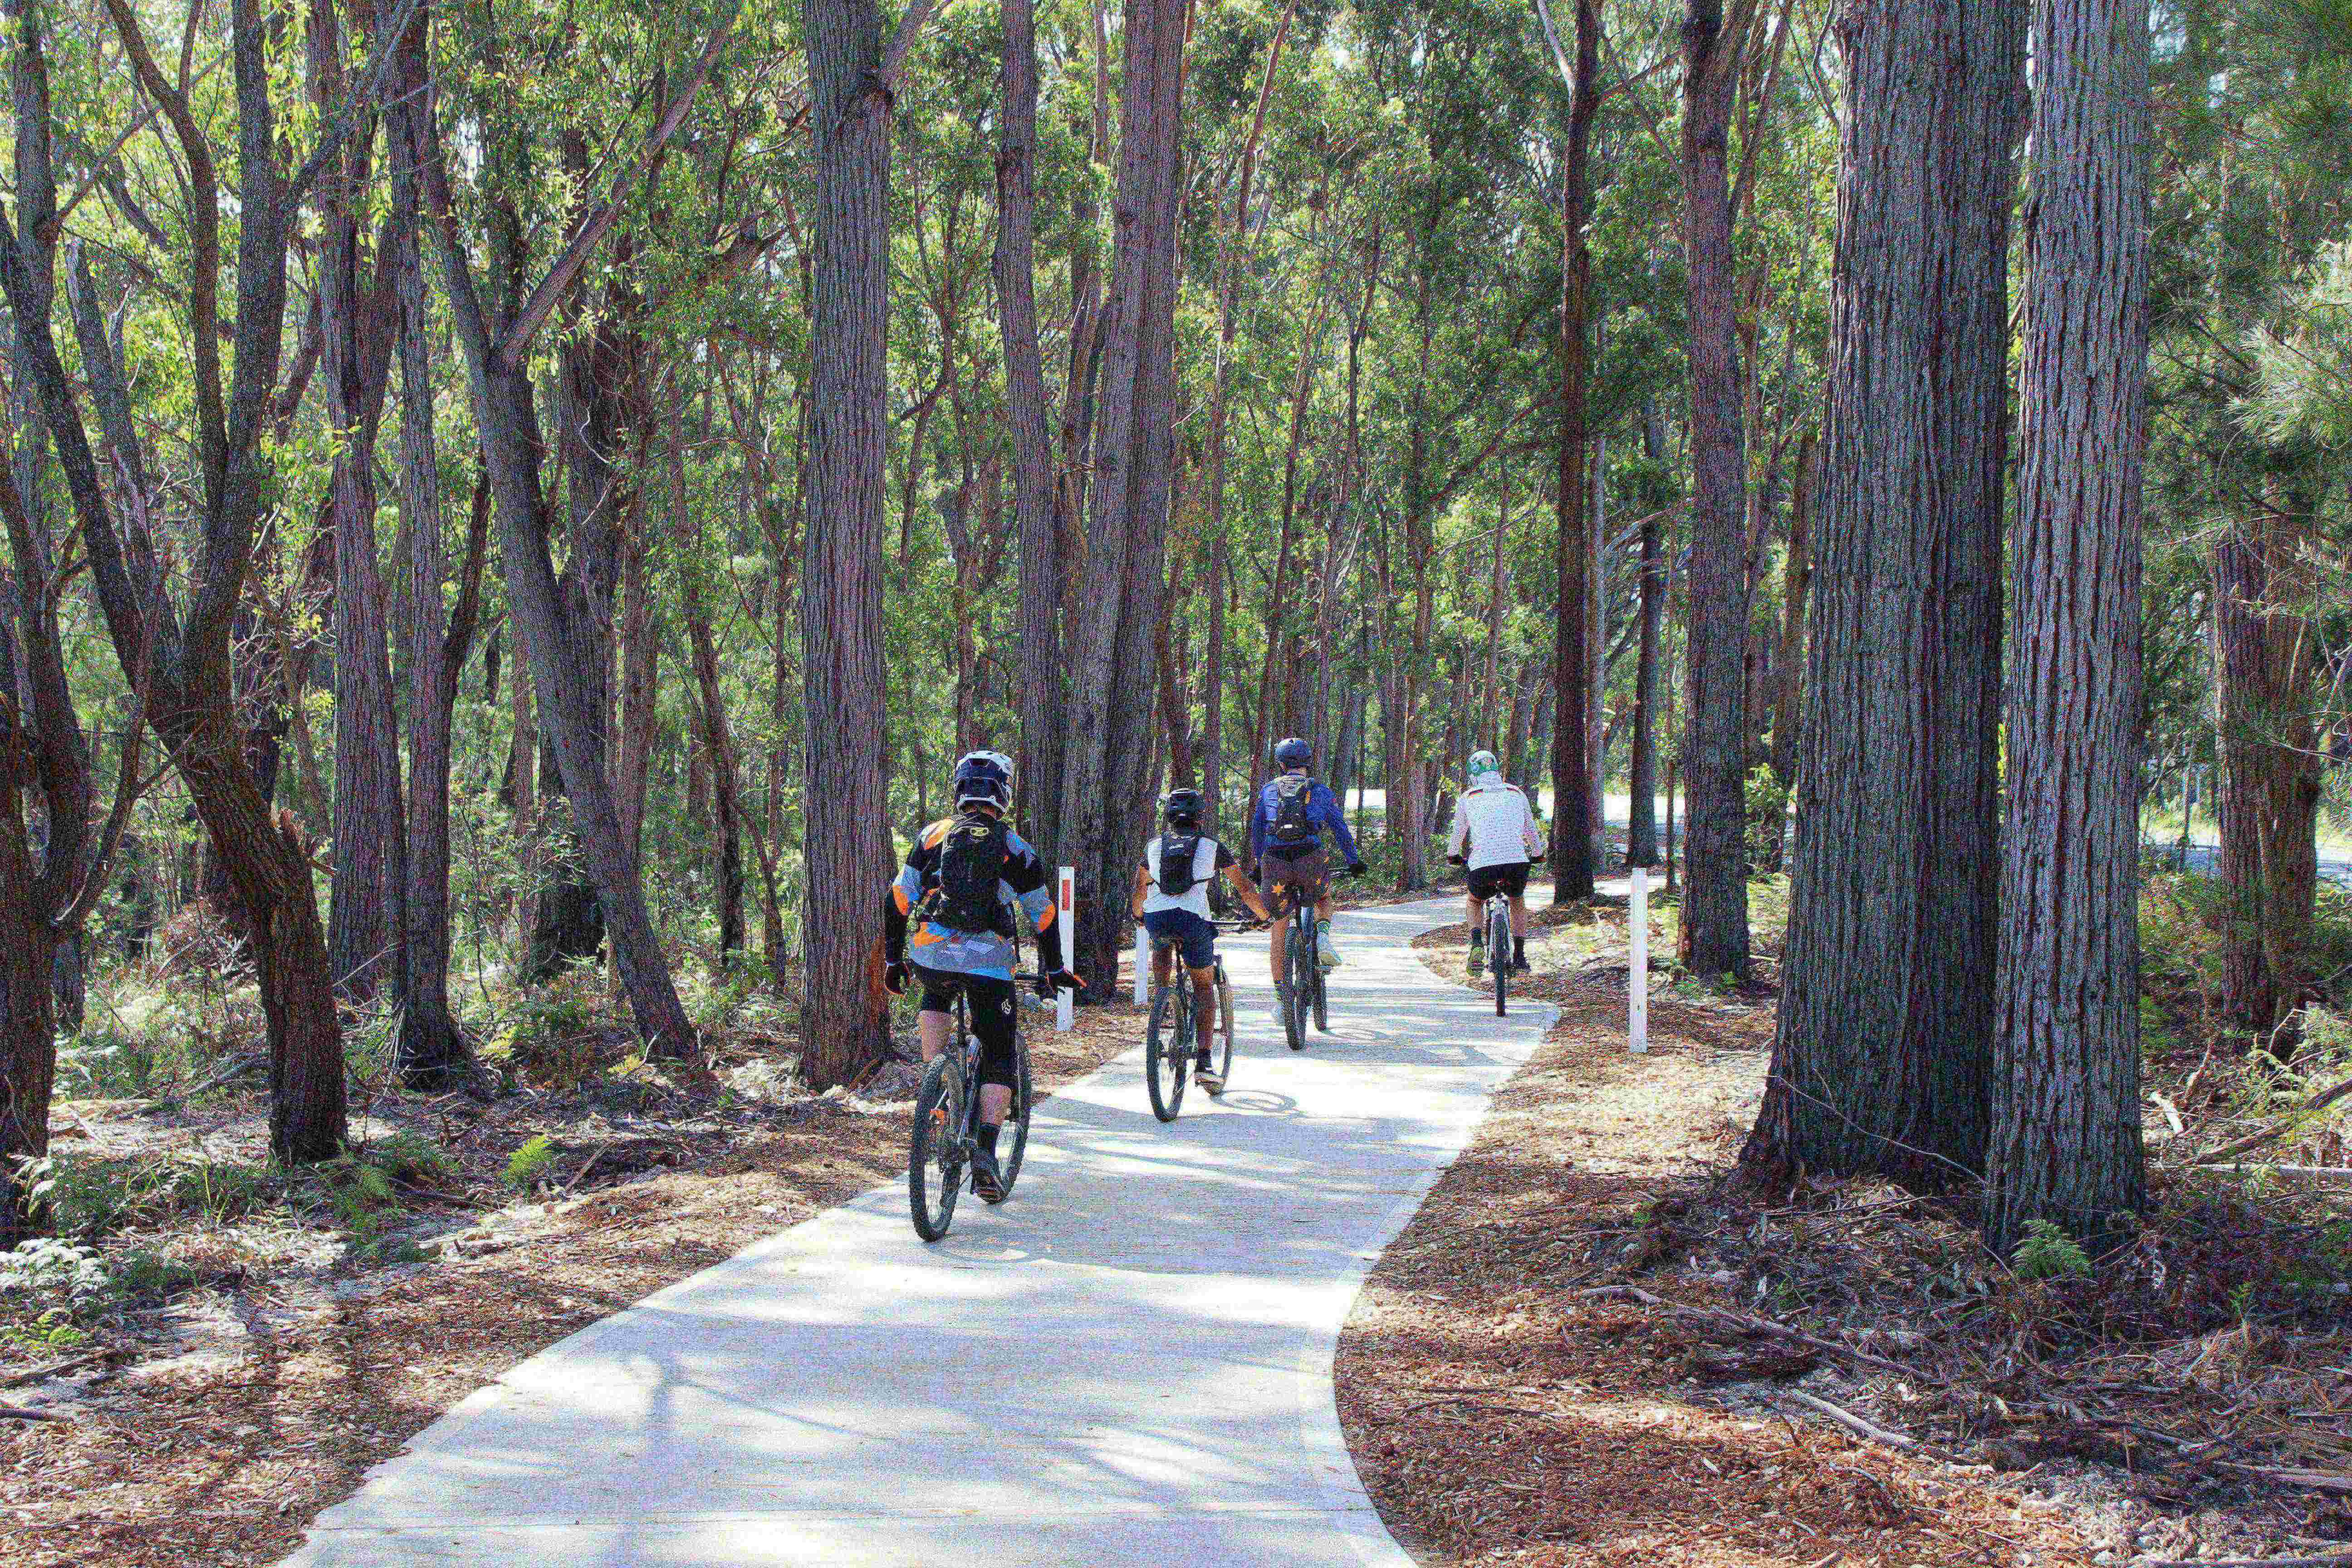 Take a spin on Bega's newest bike path